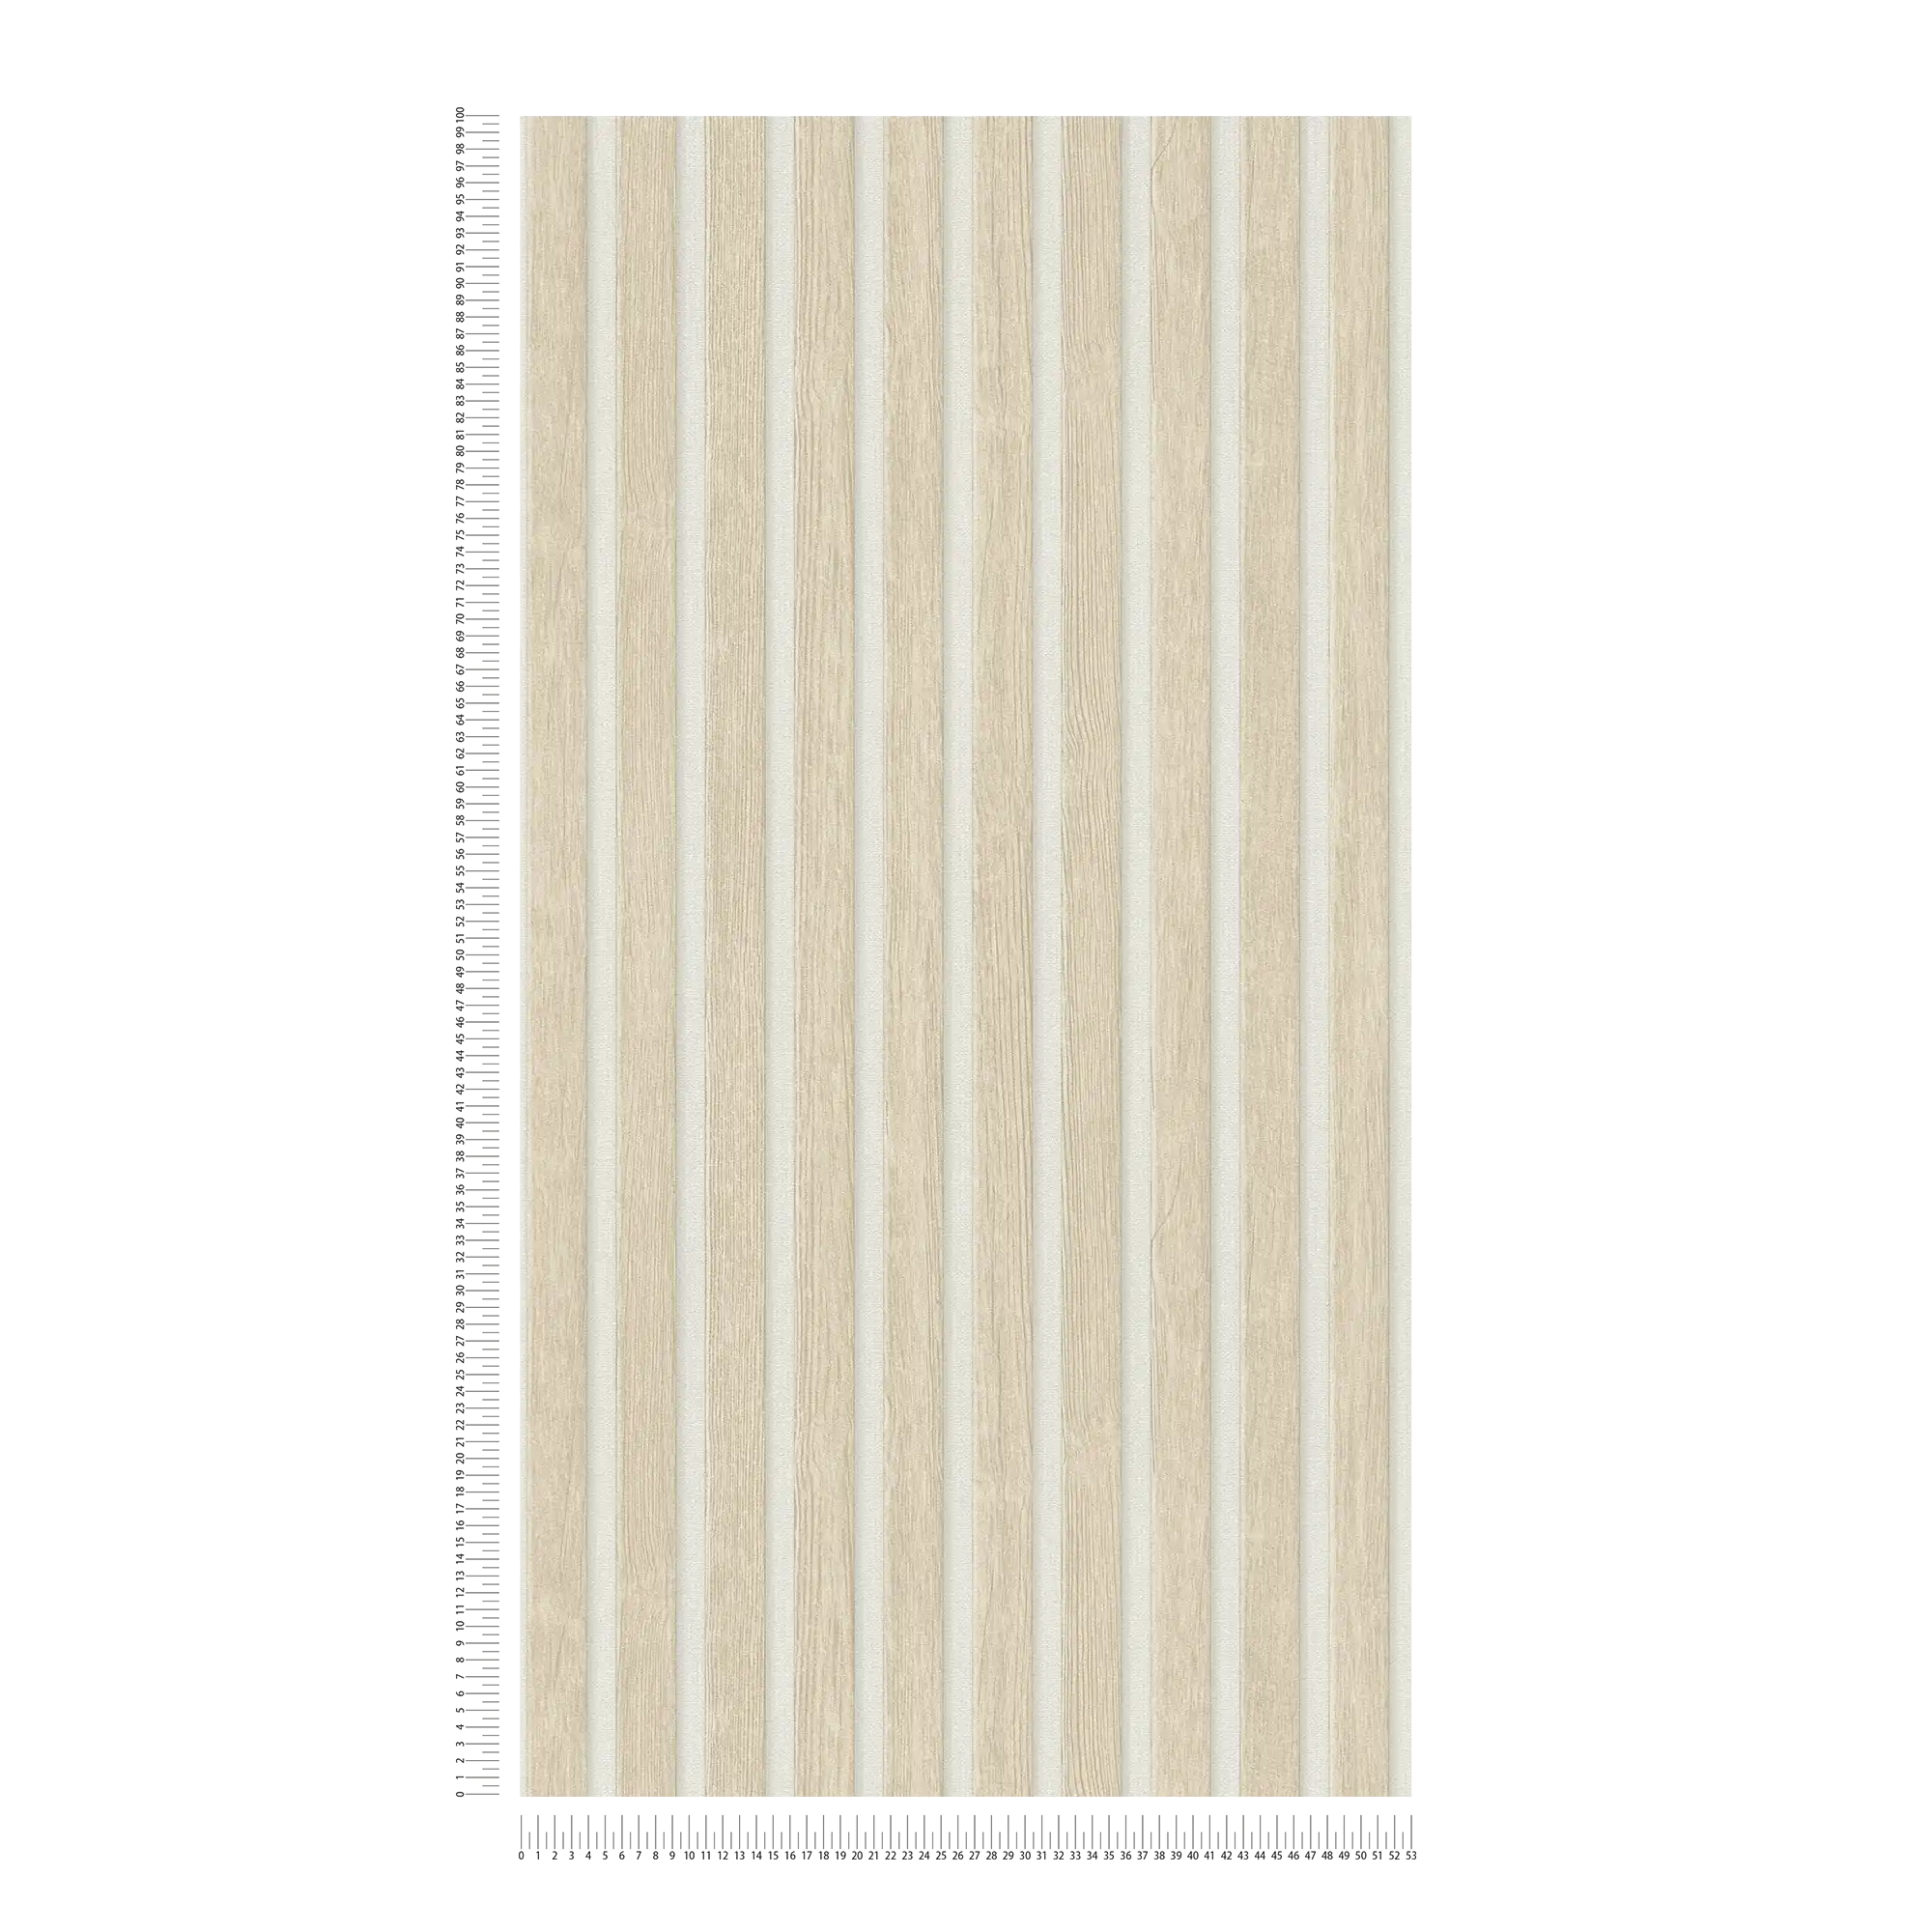             Papel pintado de madera con aspecto de panel acústico - beige, blanco
        